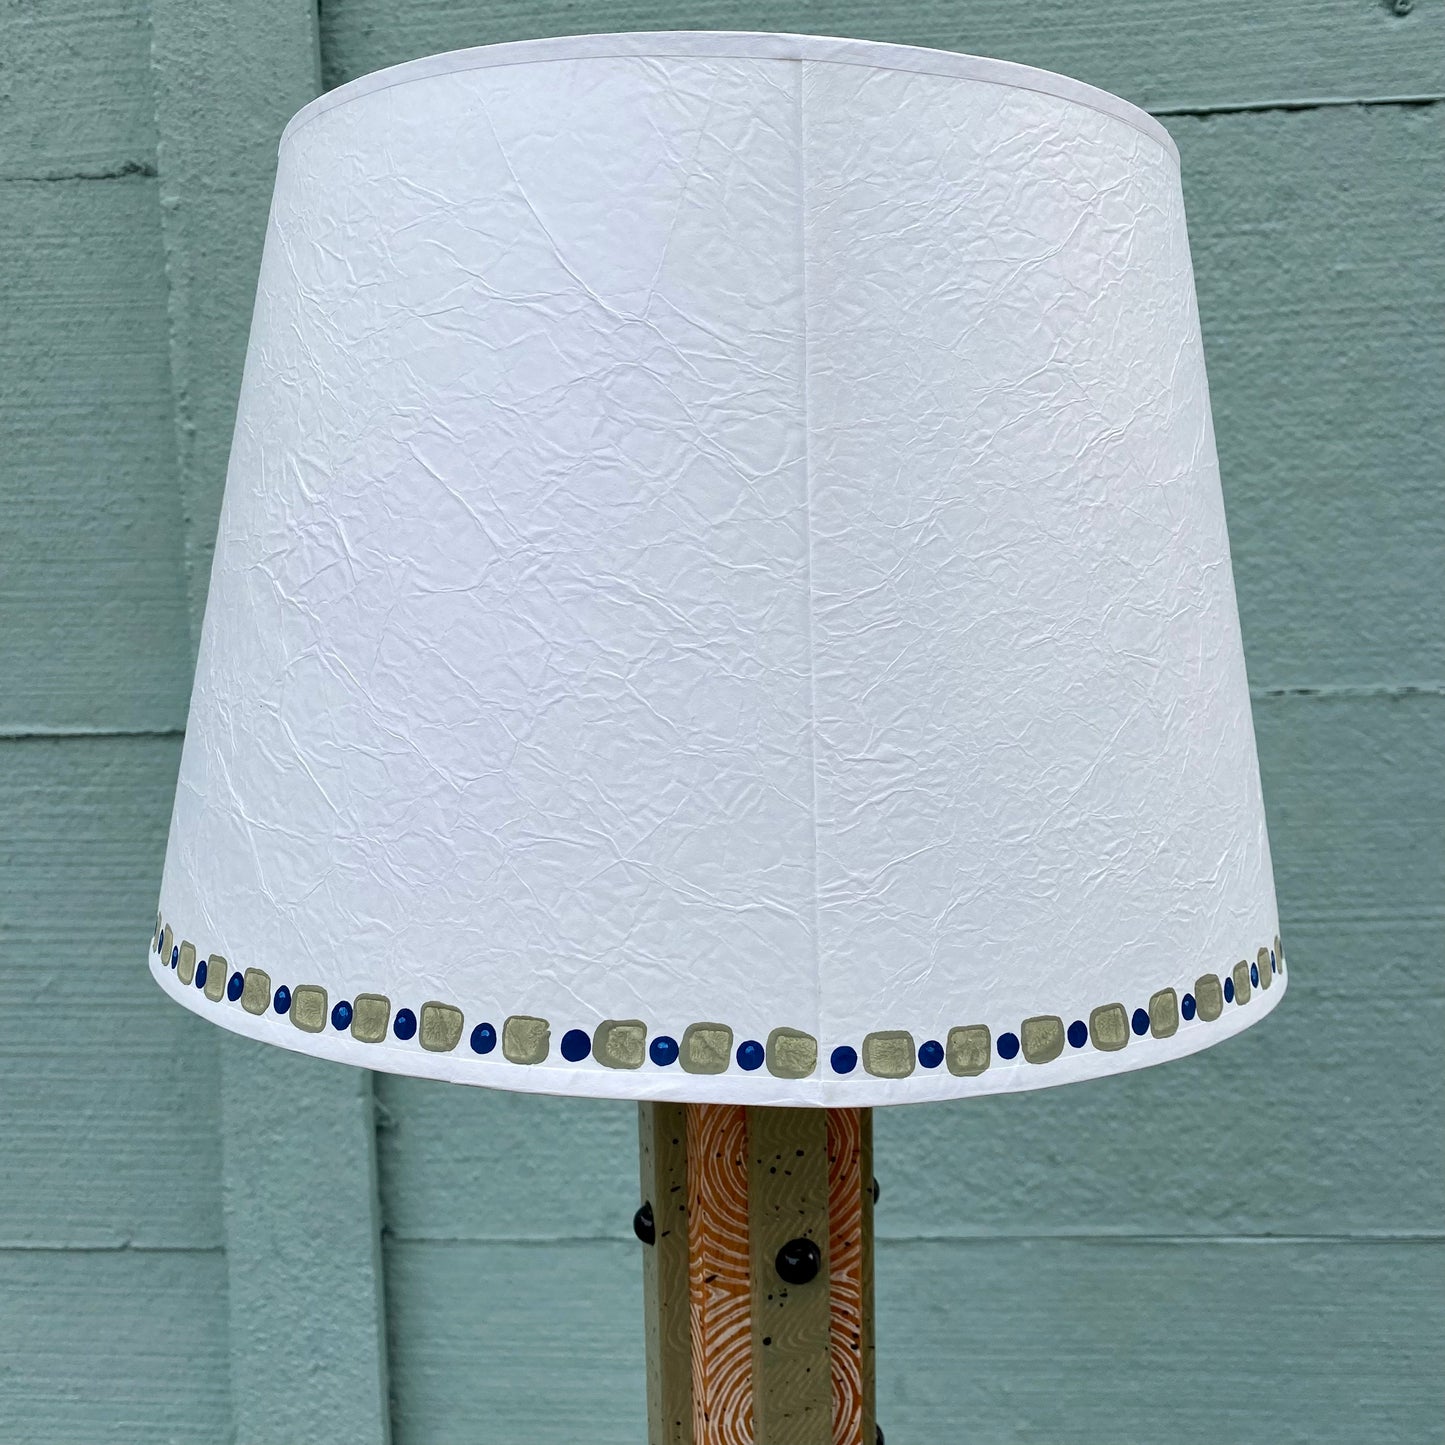 David Marsh M&T Floor Lamp - Style #6